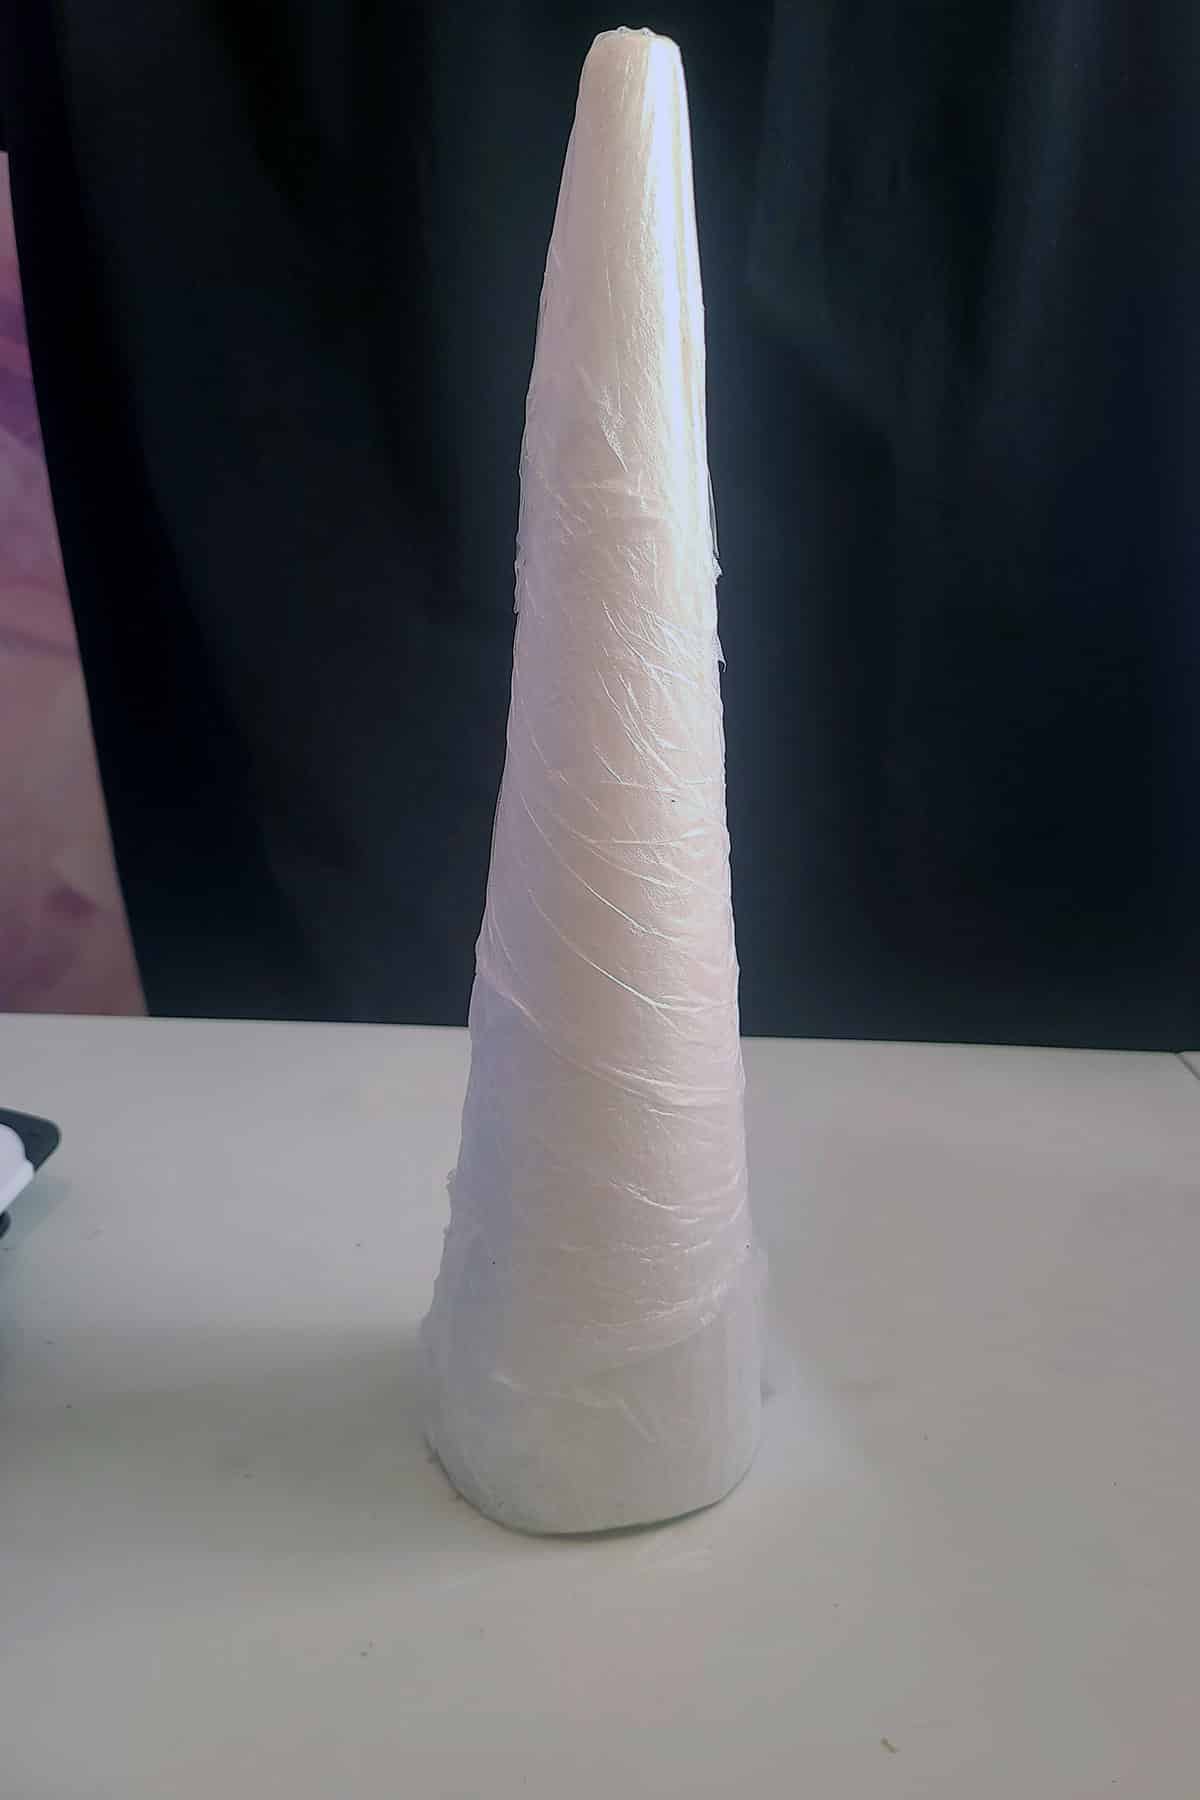 A wrapped styrofoam cone.